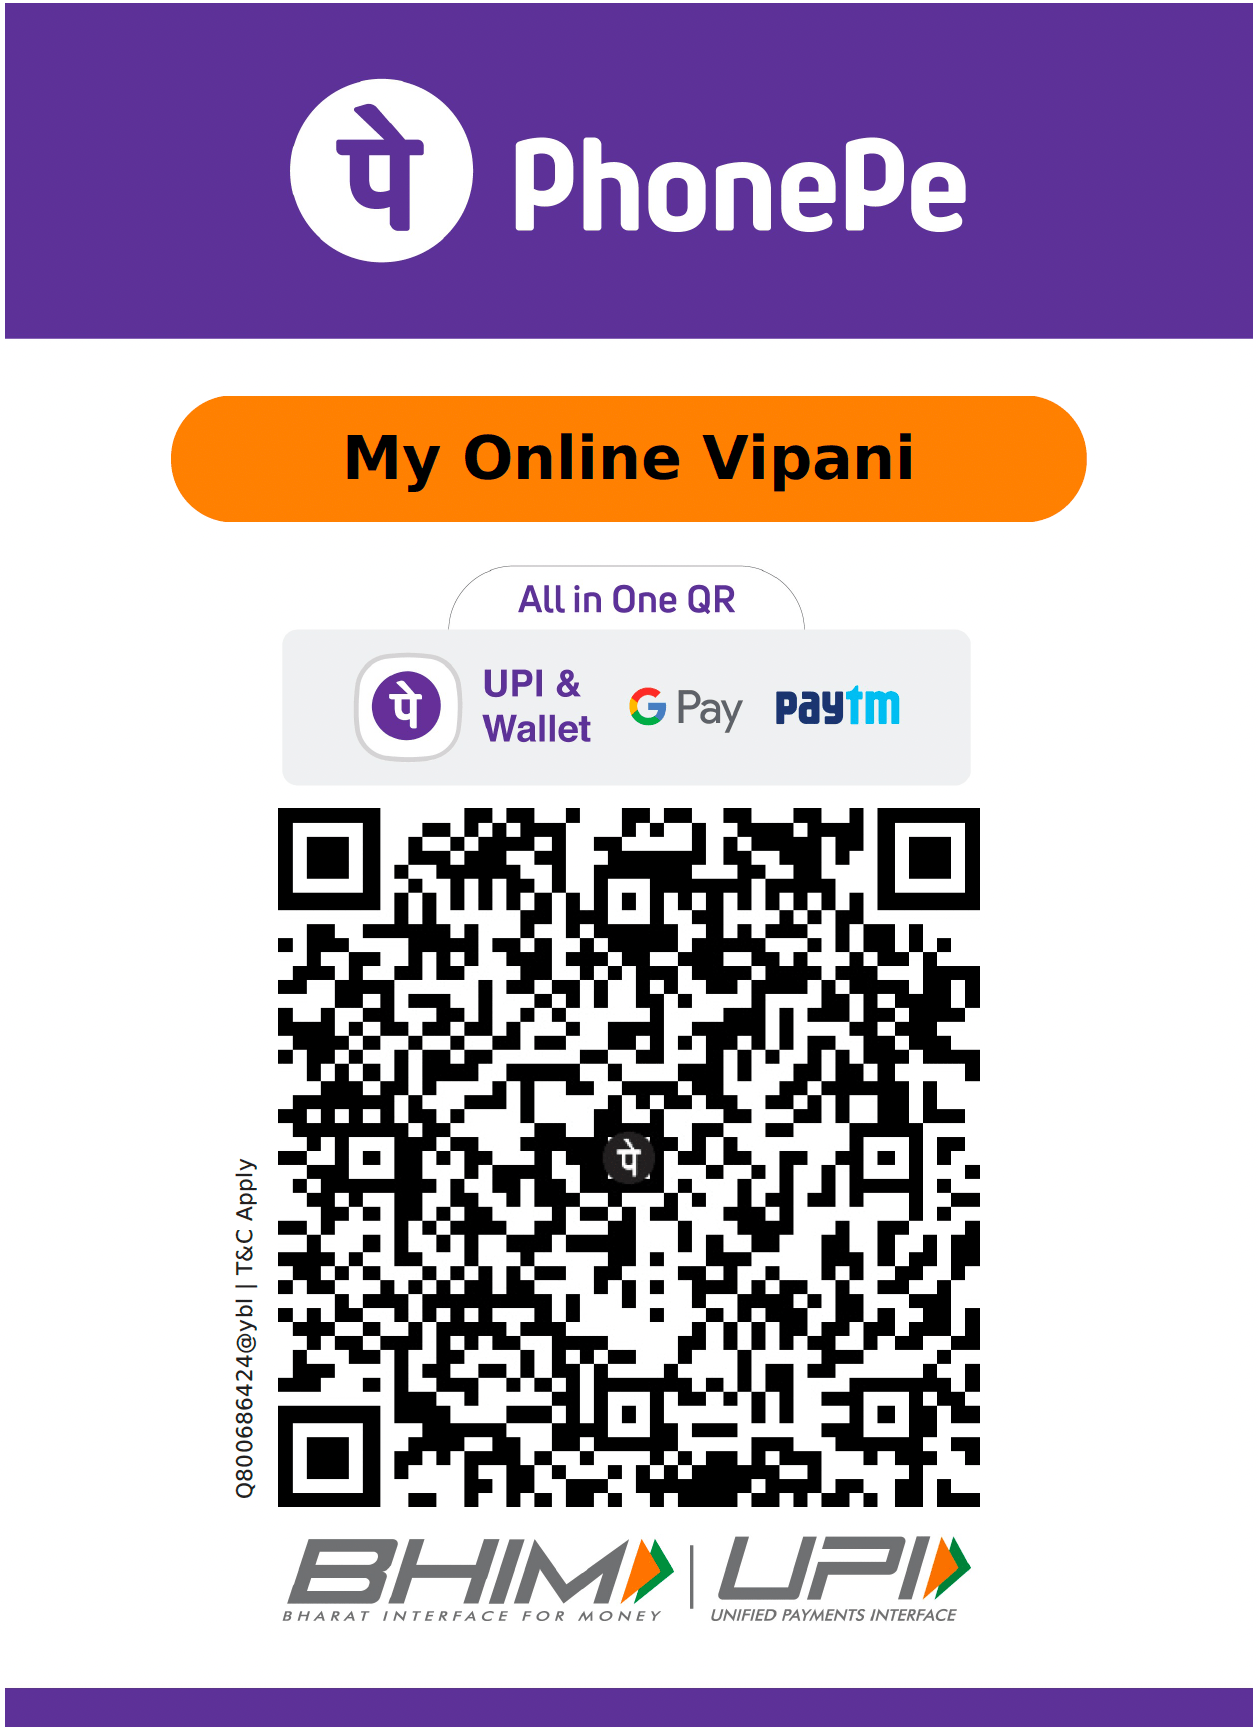 My Online Vipani - PhonePe